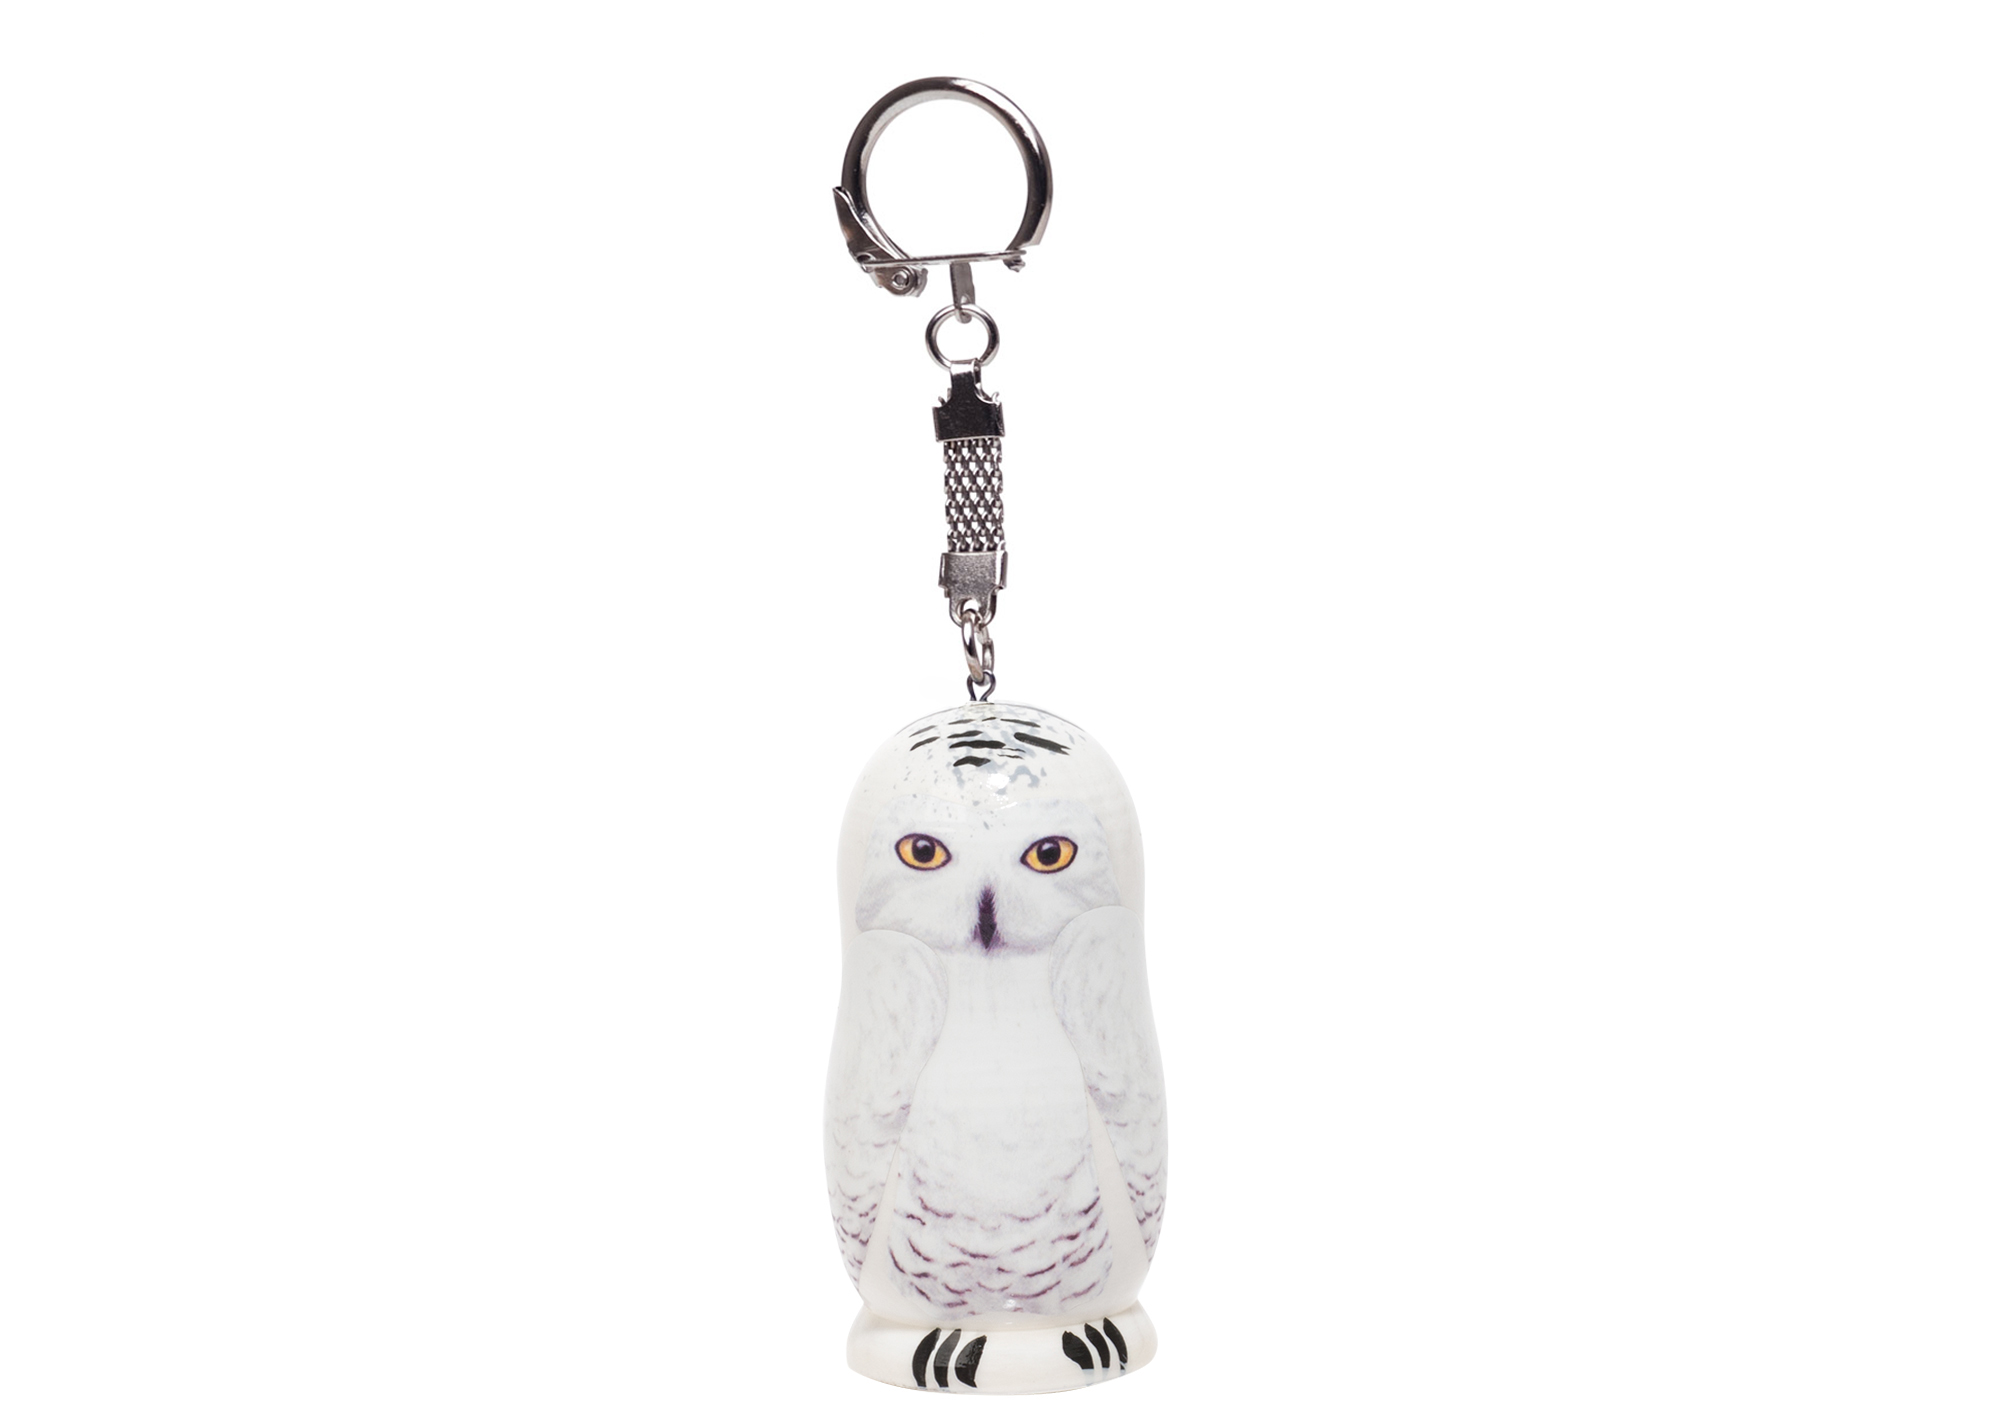 Buy Snowy Owl Keychain 2" at GoldenCockerel.com